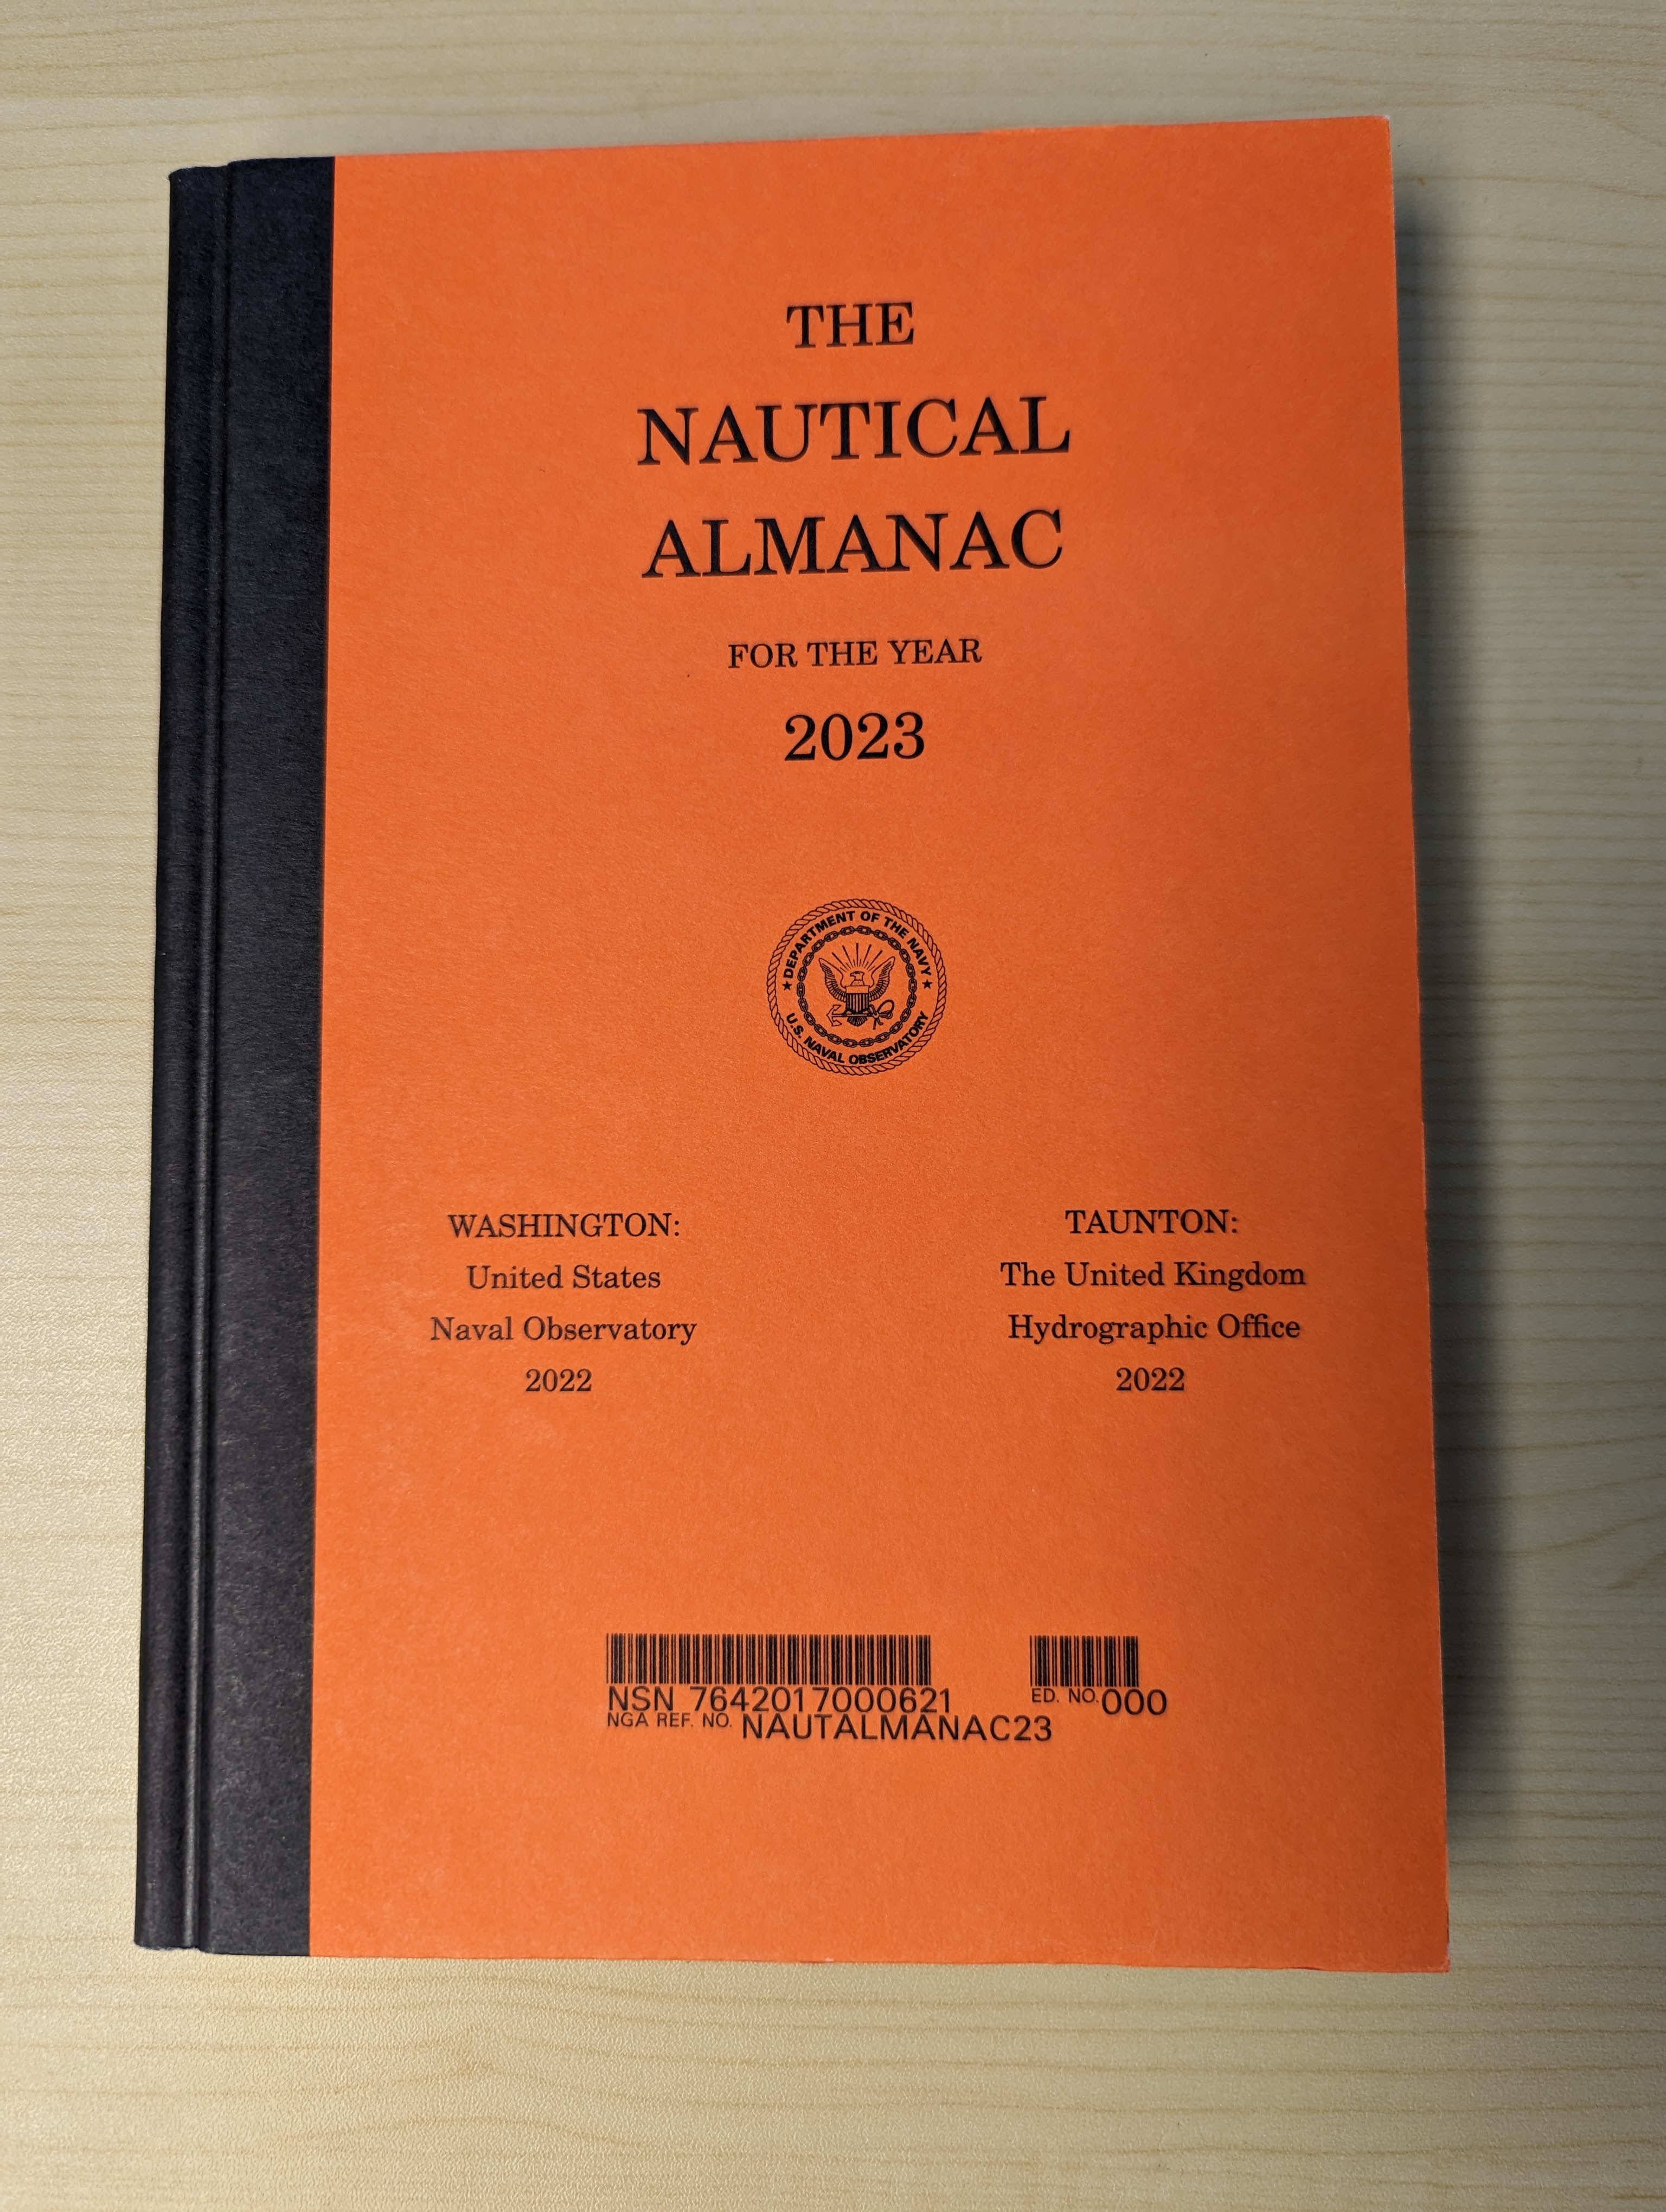 Picture of the 2023 Nautical Almanac